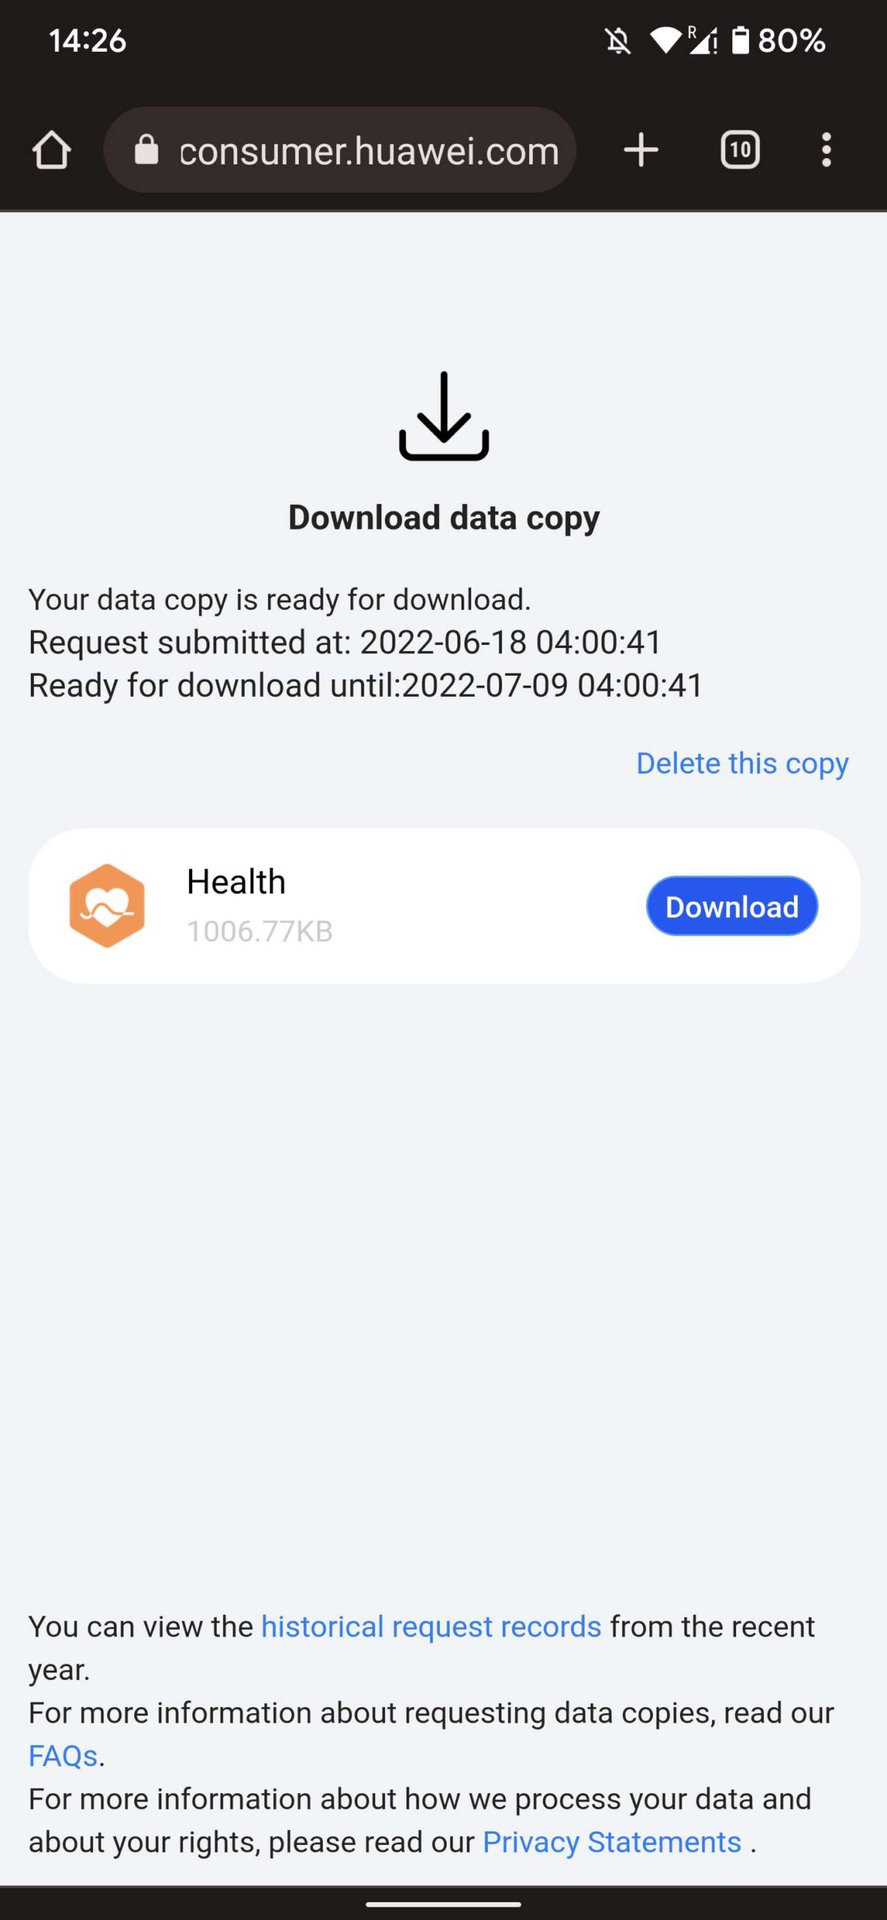 HUAWEI Health download data copy